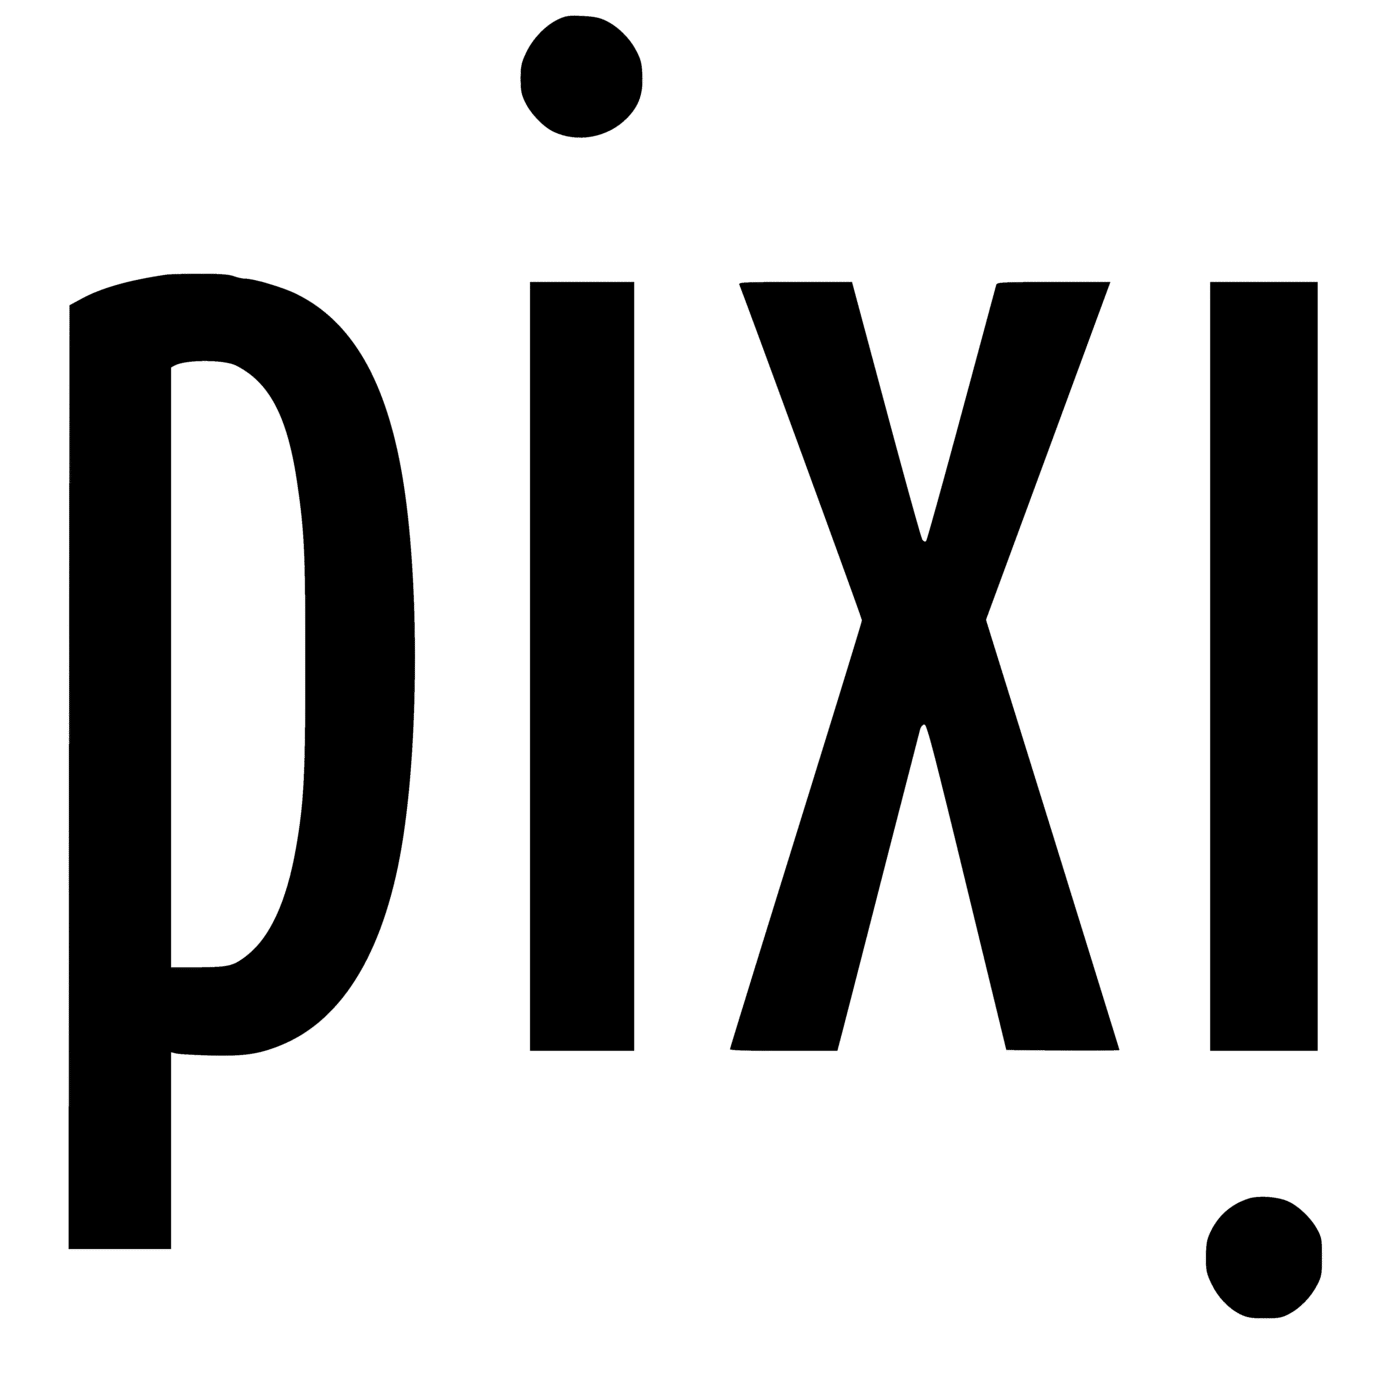 Pixi_logo copy